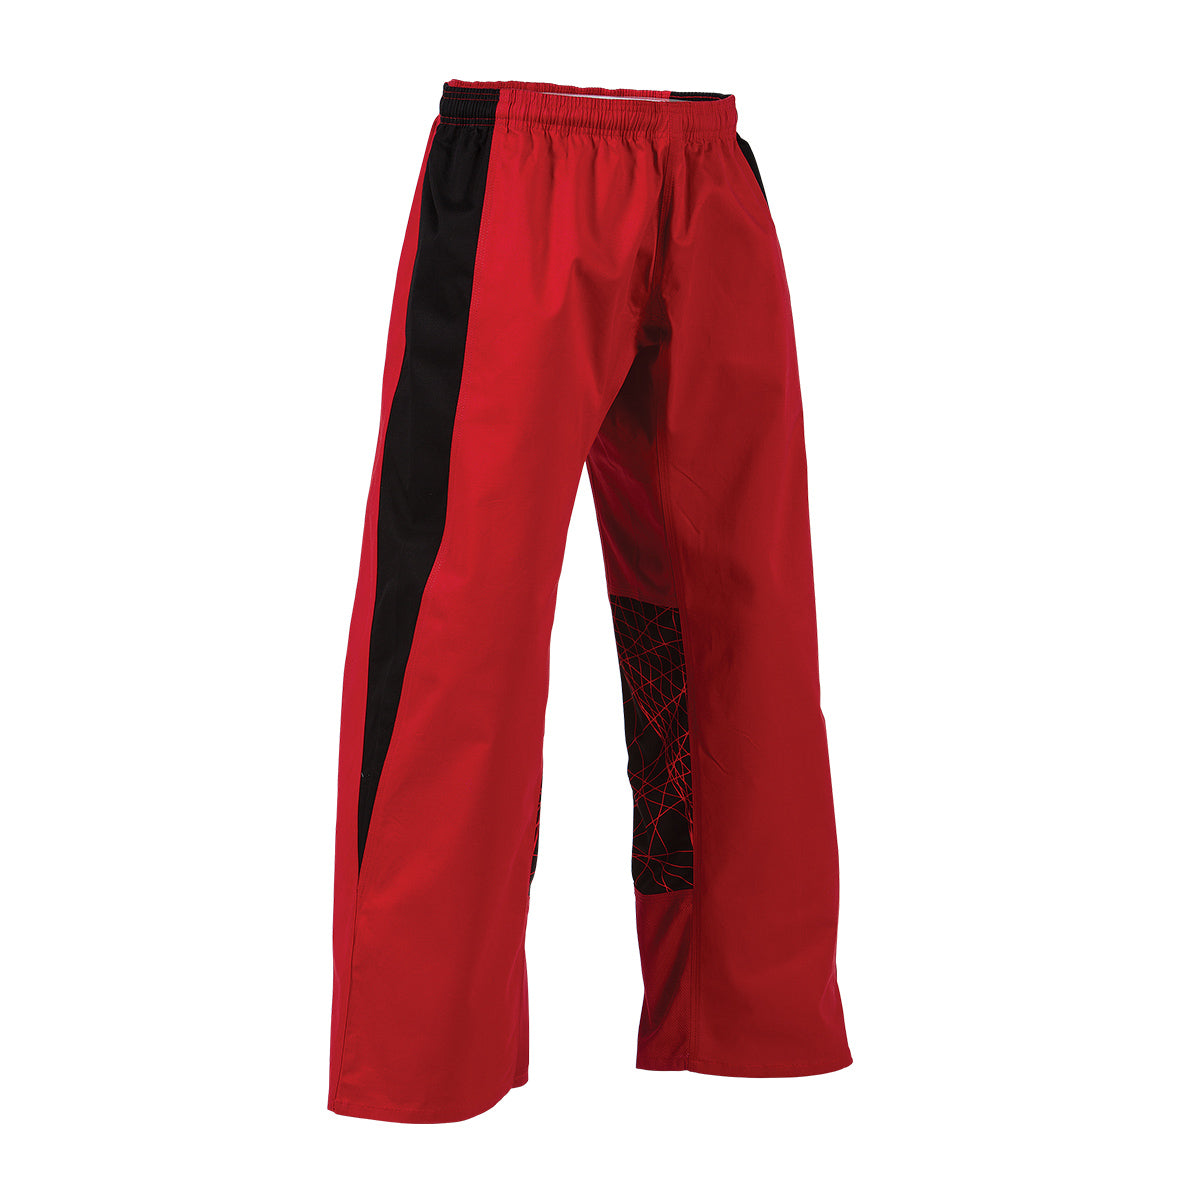 Electric EasyFit Uniform Pants Red Black